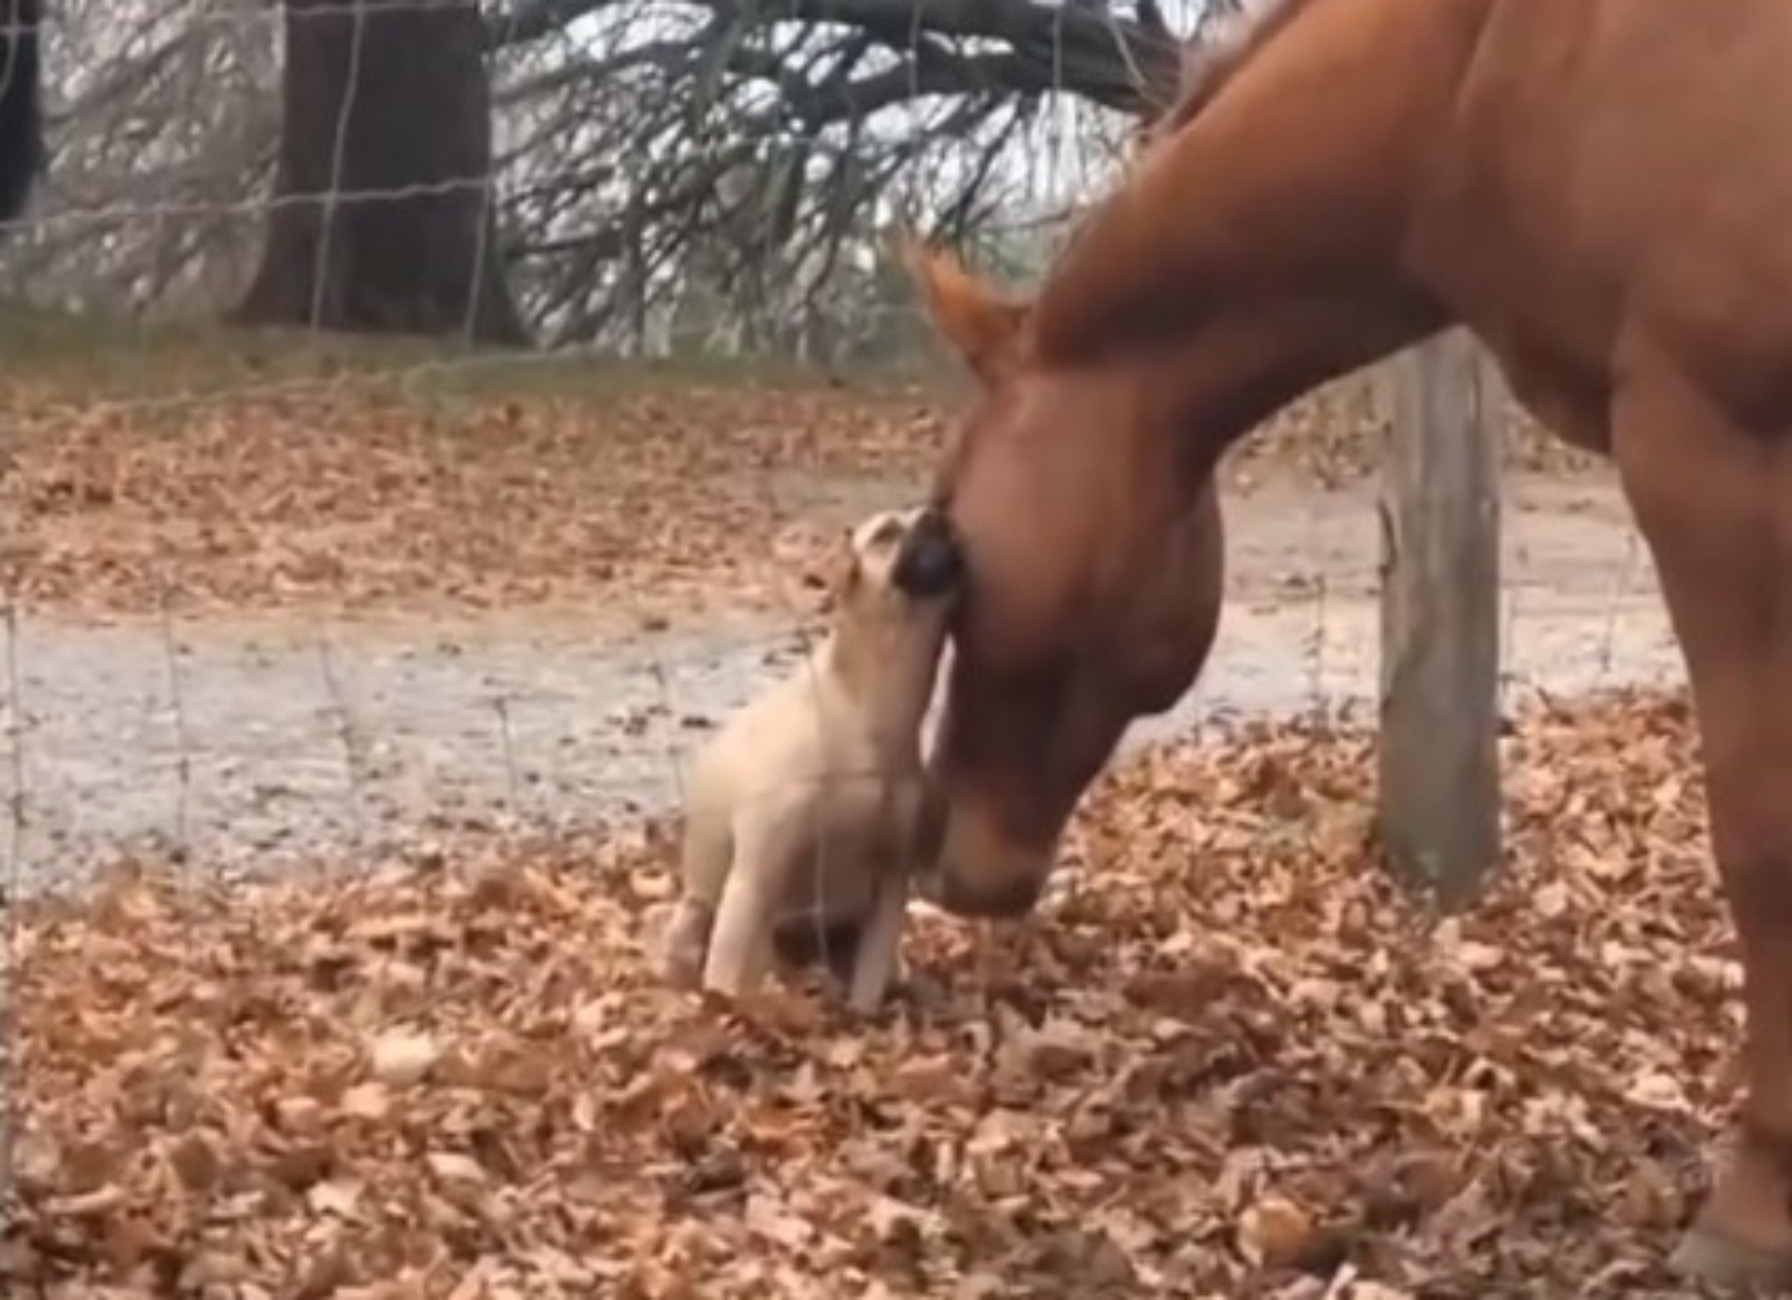 cavallo e cane